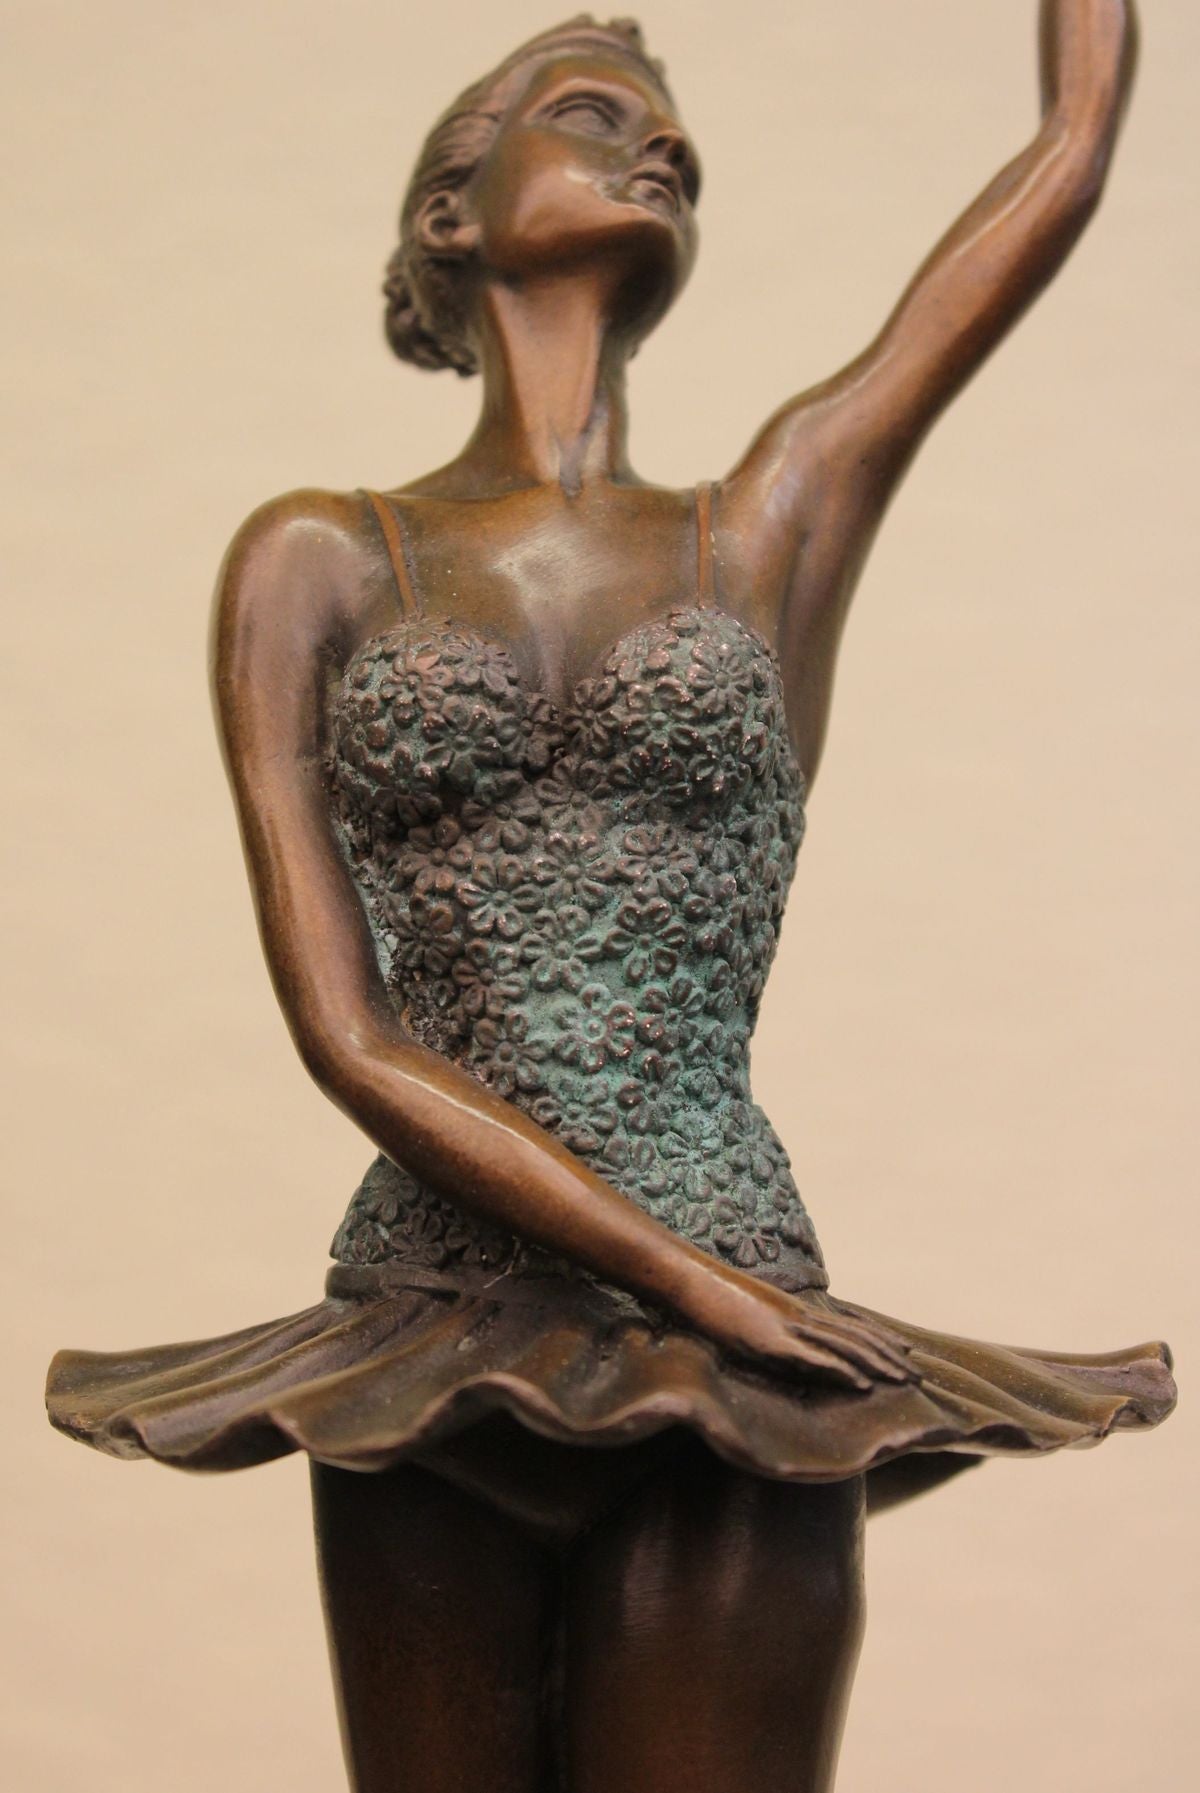 The Little Fourteen Year Old Dancer Bronze Ballerina Sculpture, Signed: Milo